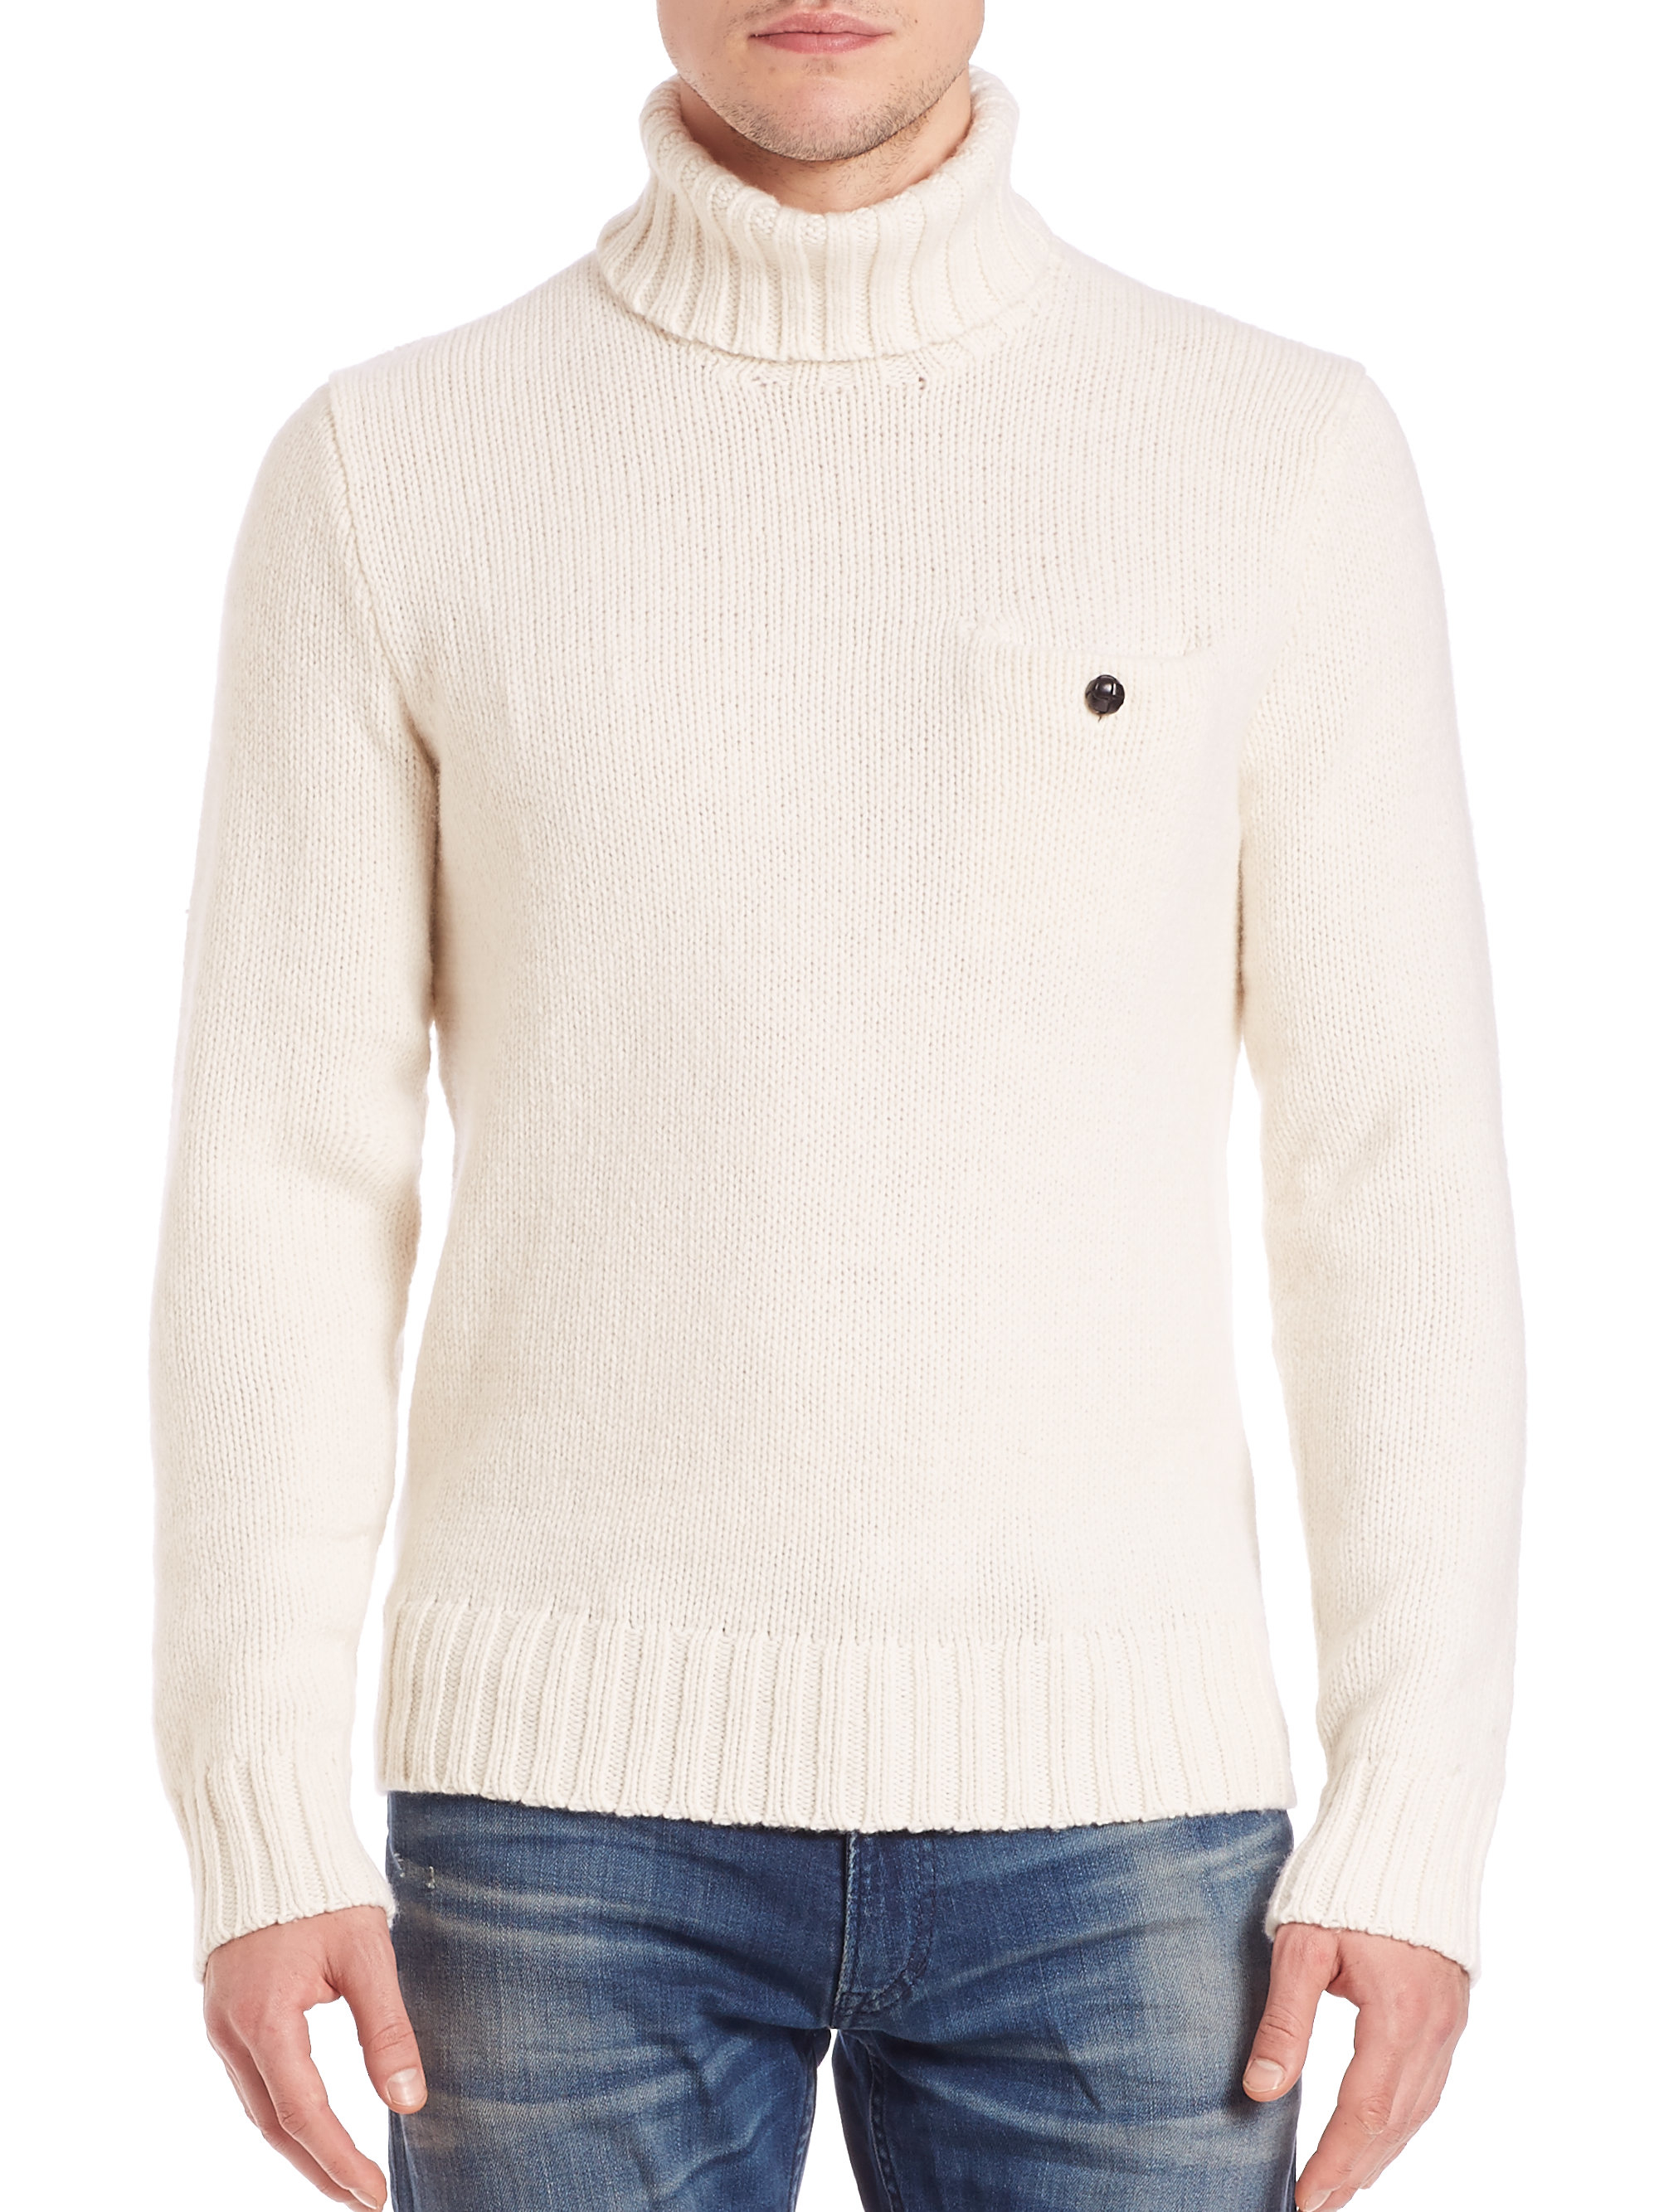 Polo Ralph Lauren Wool Turtleneck Sweater in Cream (Natural) for Men - Lyst